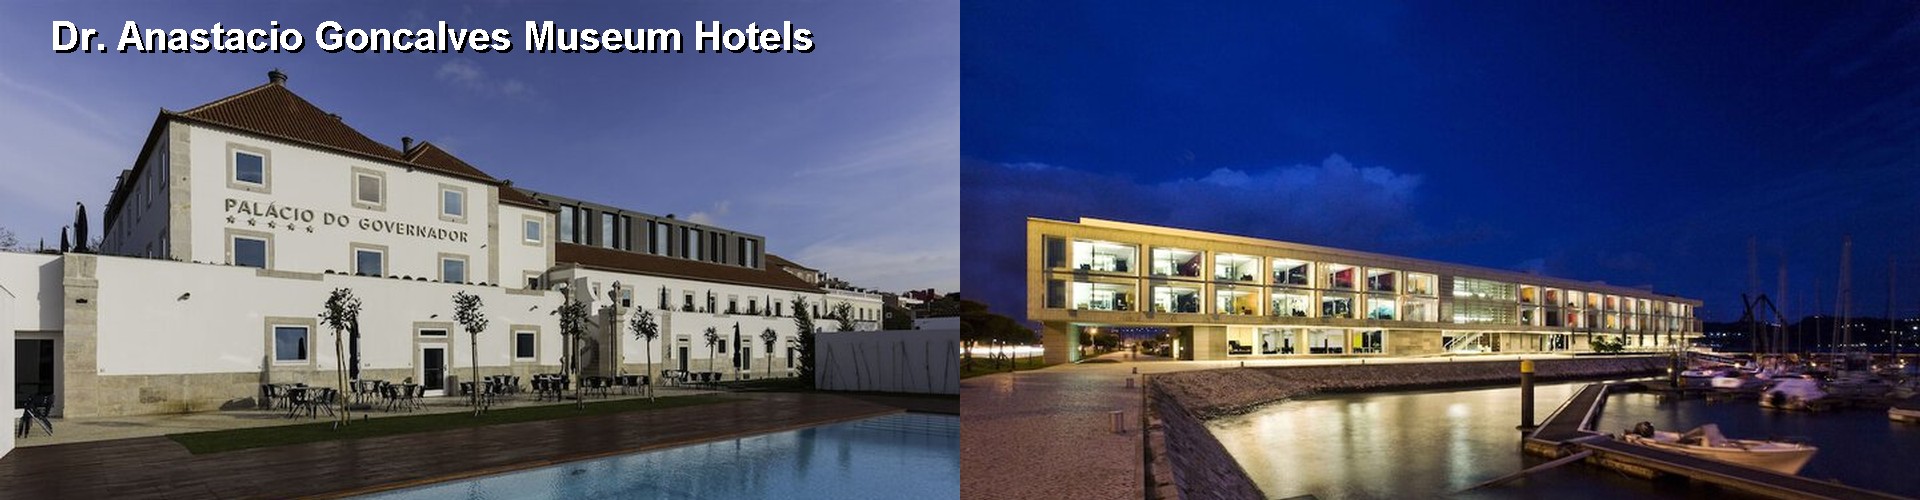 5 Best Hotels near Dr. Anastacio Goncalves Museum